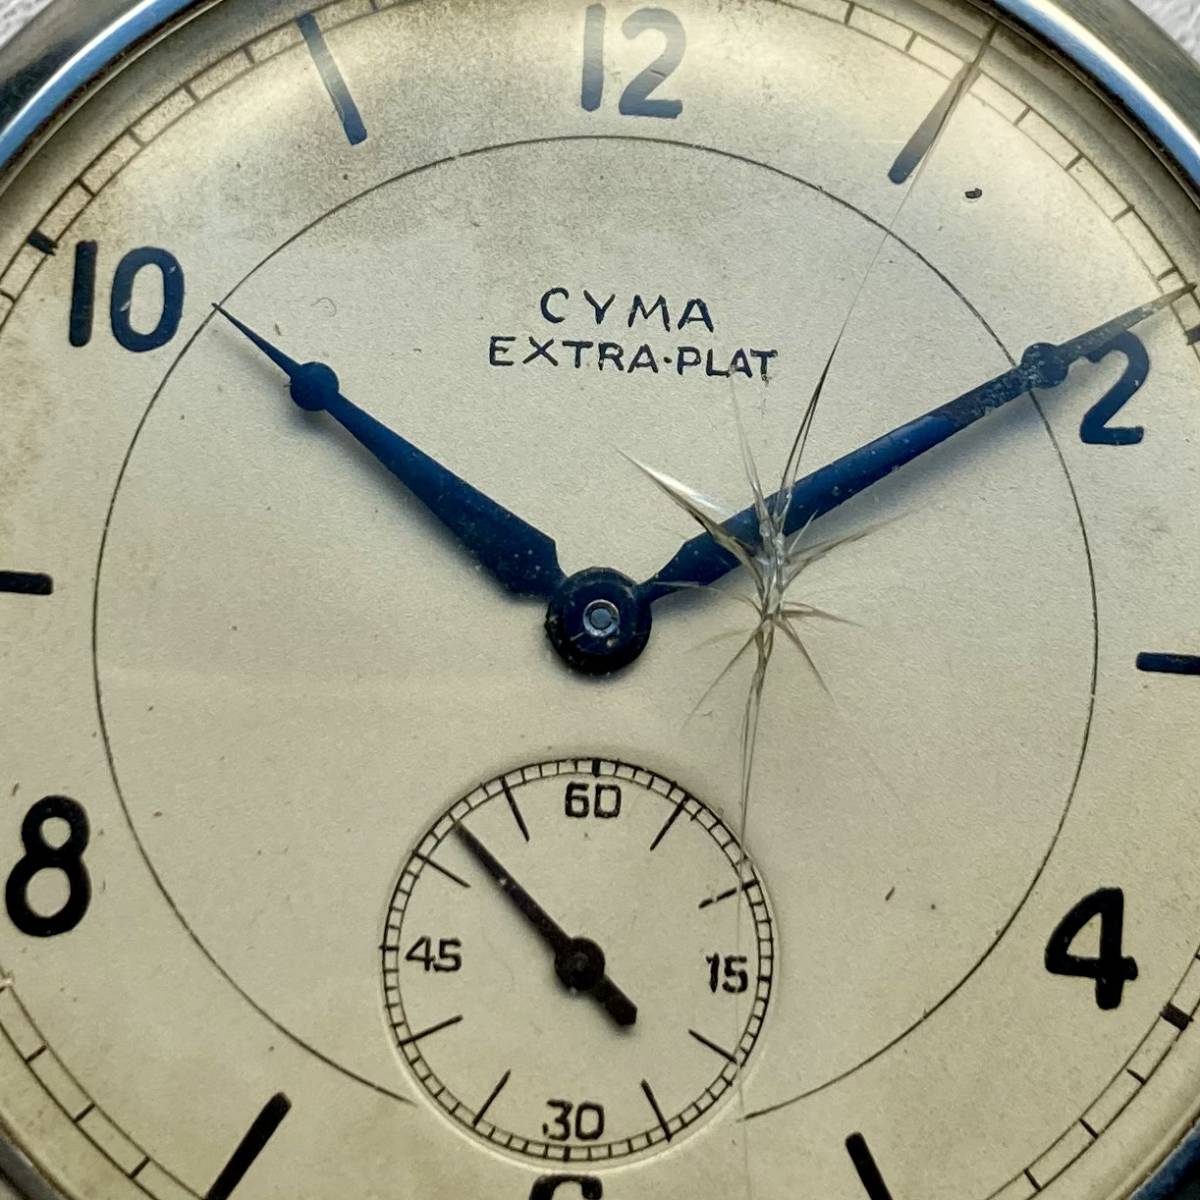 [ operation goods ] Cima CYMA antique pocket watch hand winding Switzerland case diameter 45. Vintage pocket watch open face 